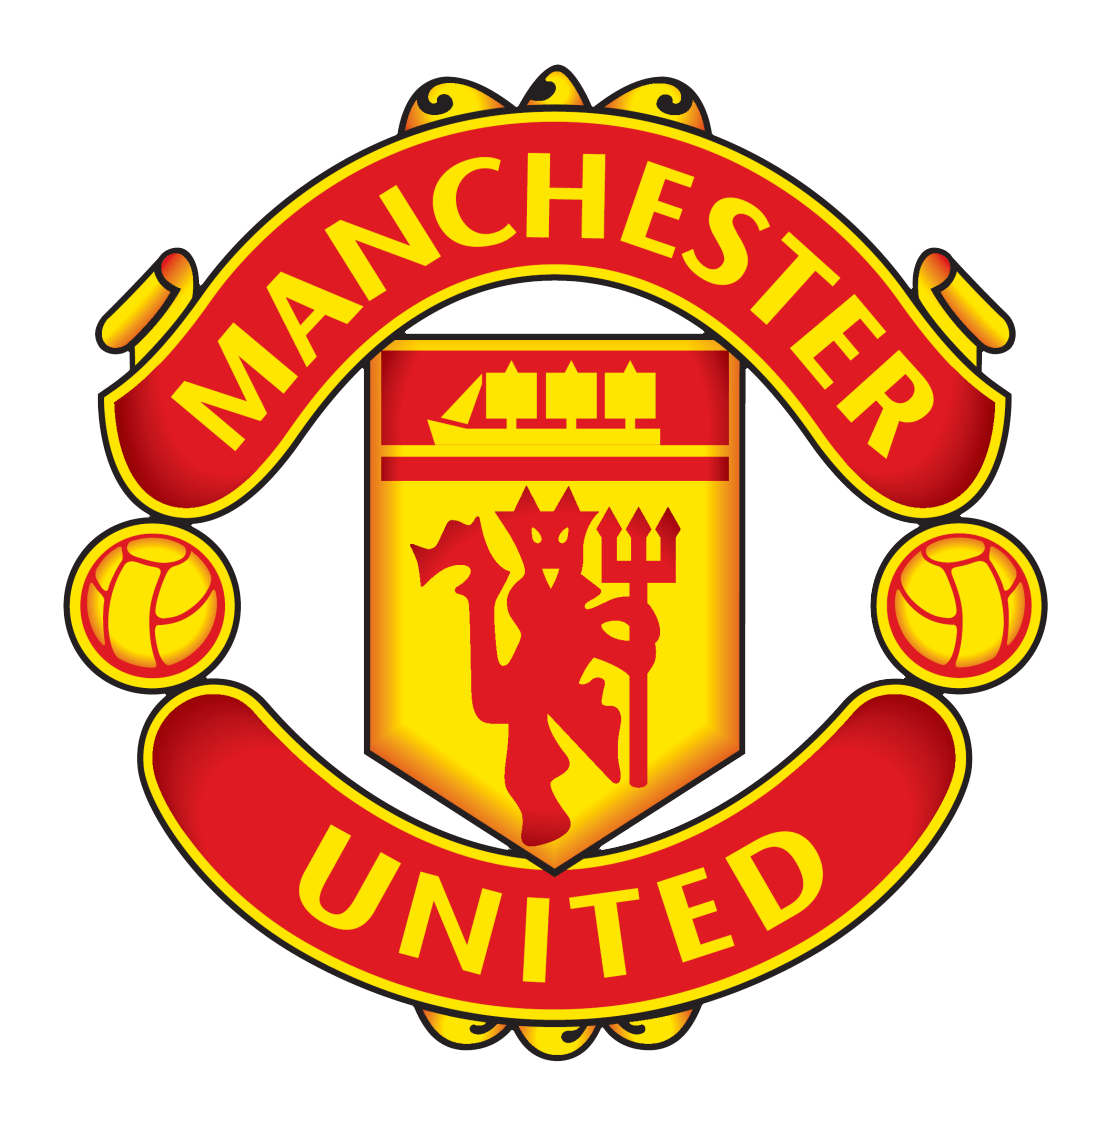 Manchester United Wallpaper 3D 2015